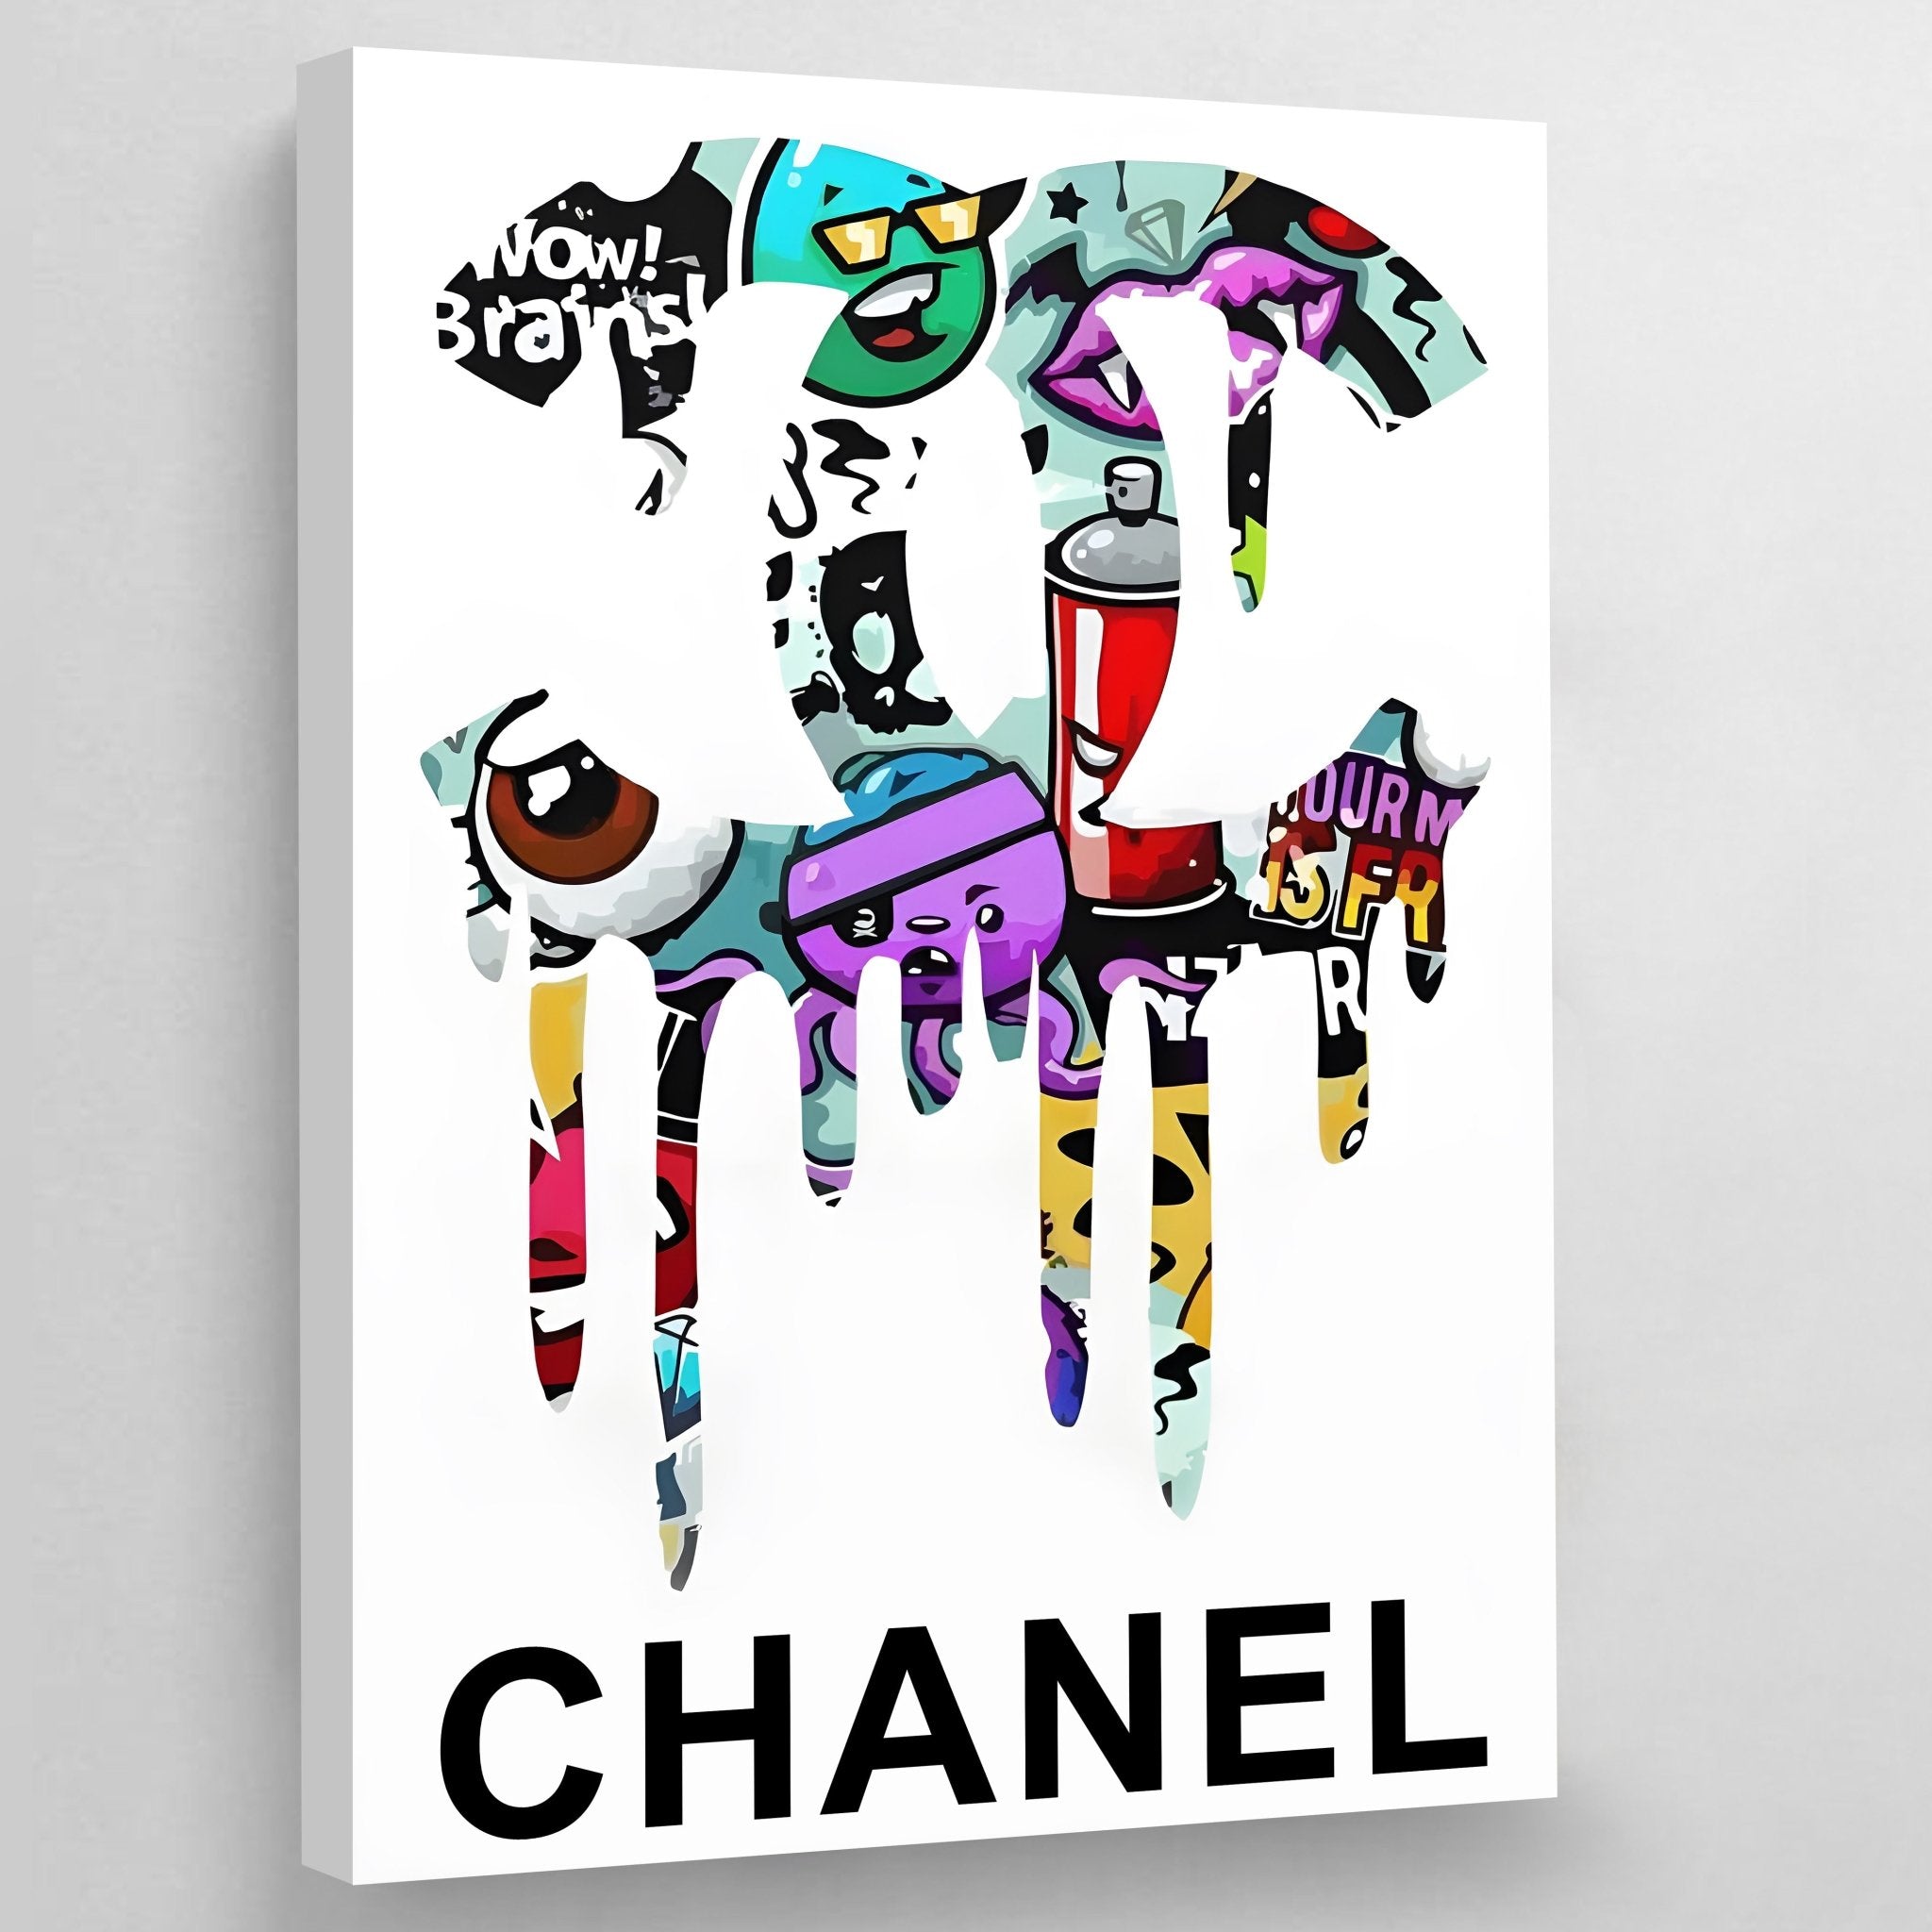 Chanel - Pop Wall Art Print by RS Artist - BIG Wall Décor